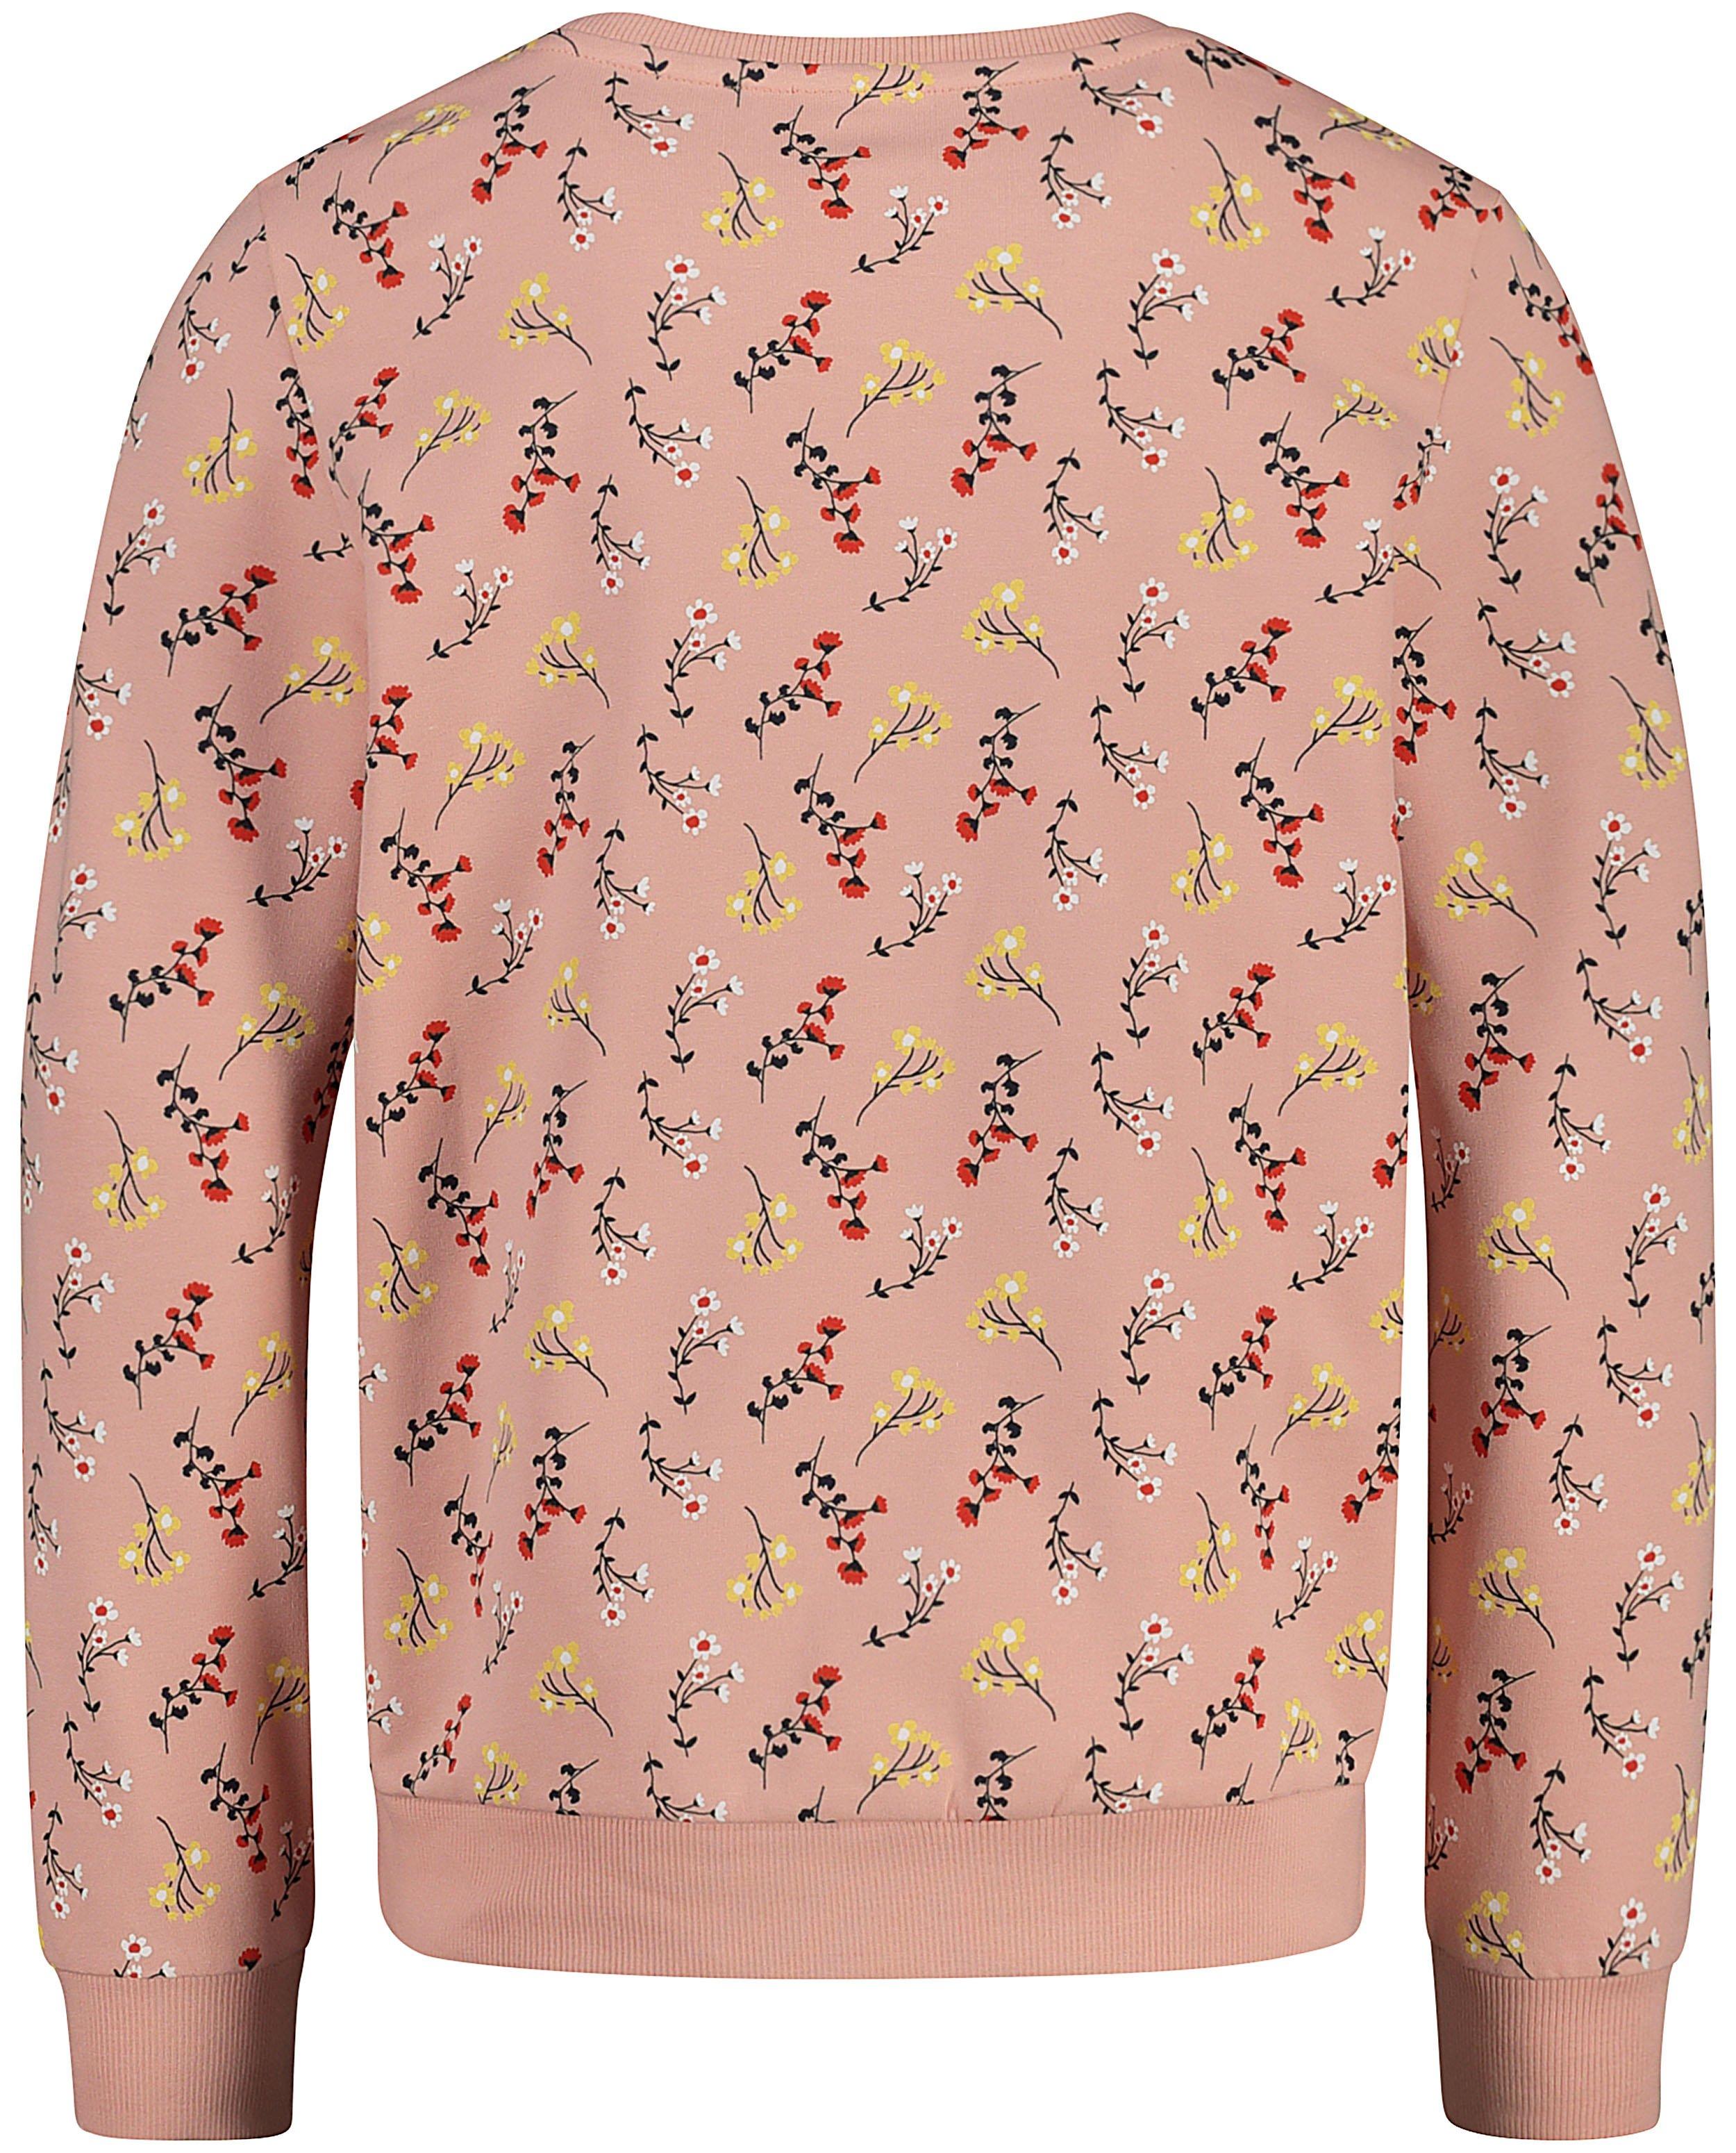 Sweats - Roze sweater met print #LikeMe